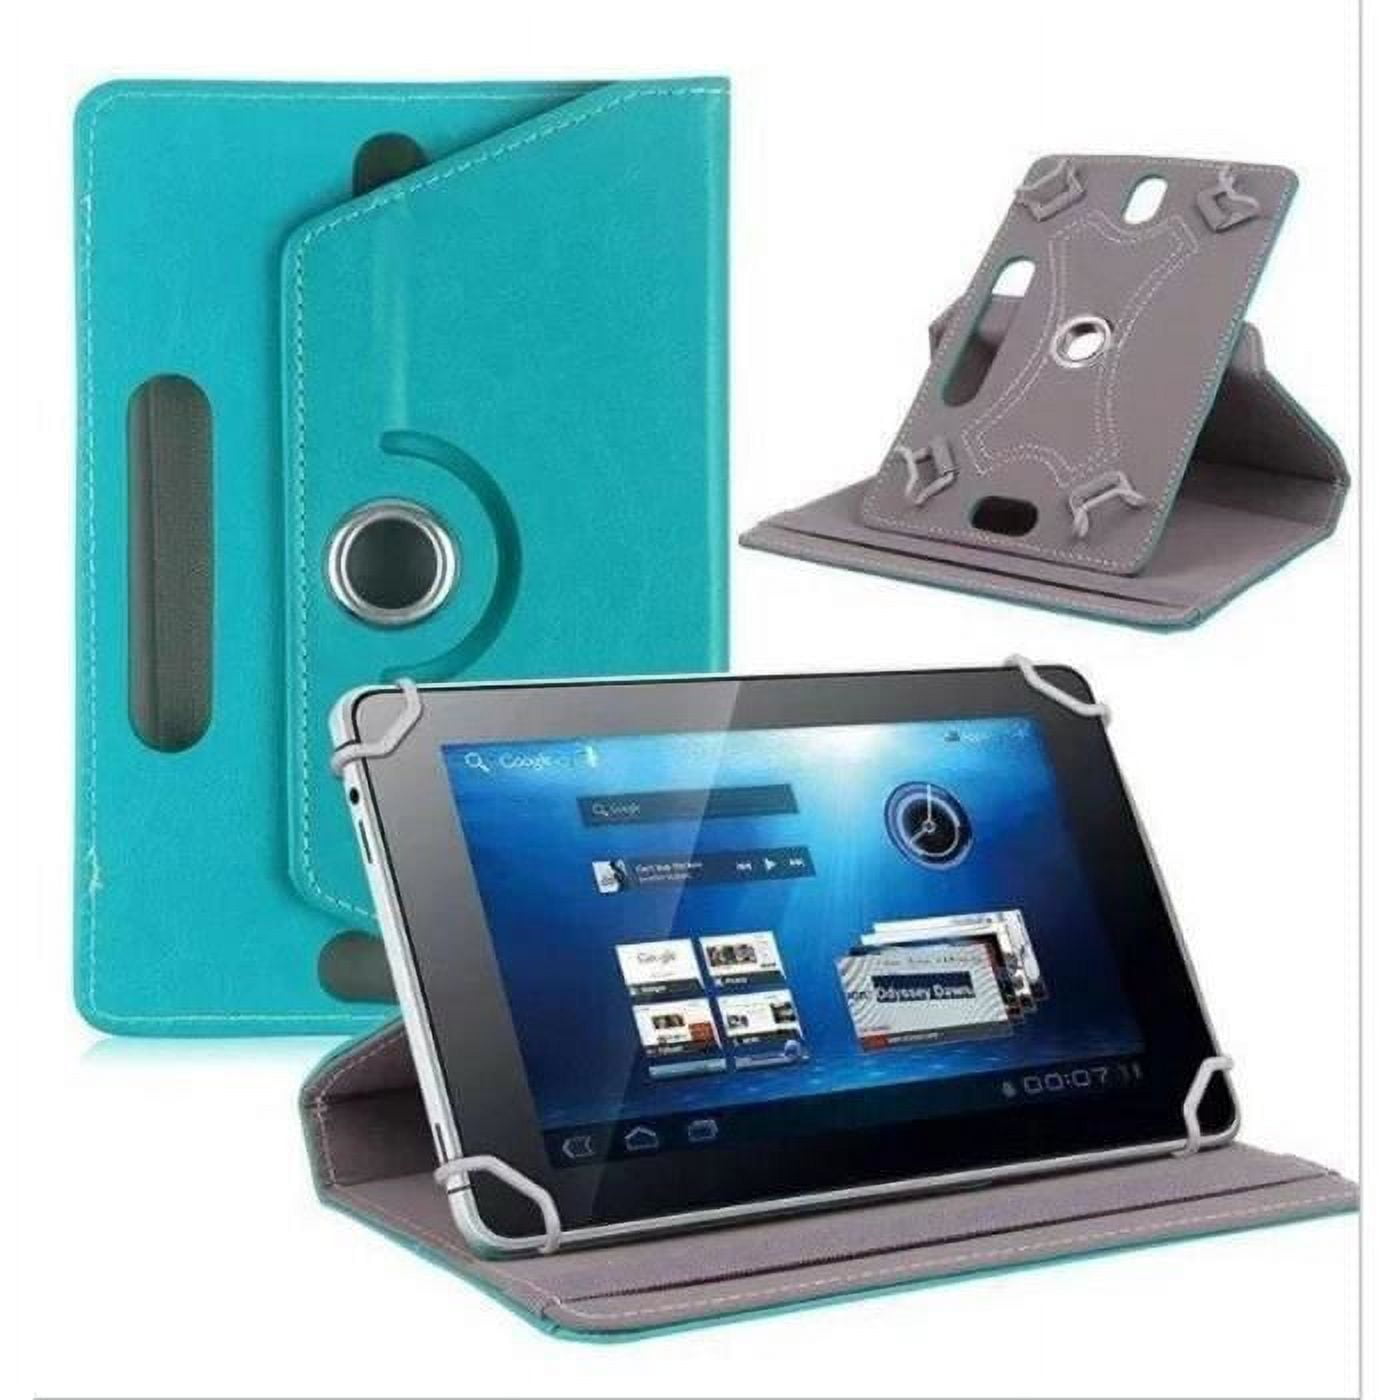 2-in-1 Detachable 10.1″ Core Tablet with Windows® 11 – Naxa Electronics